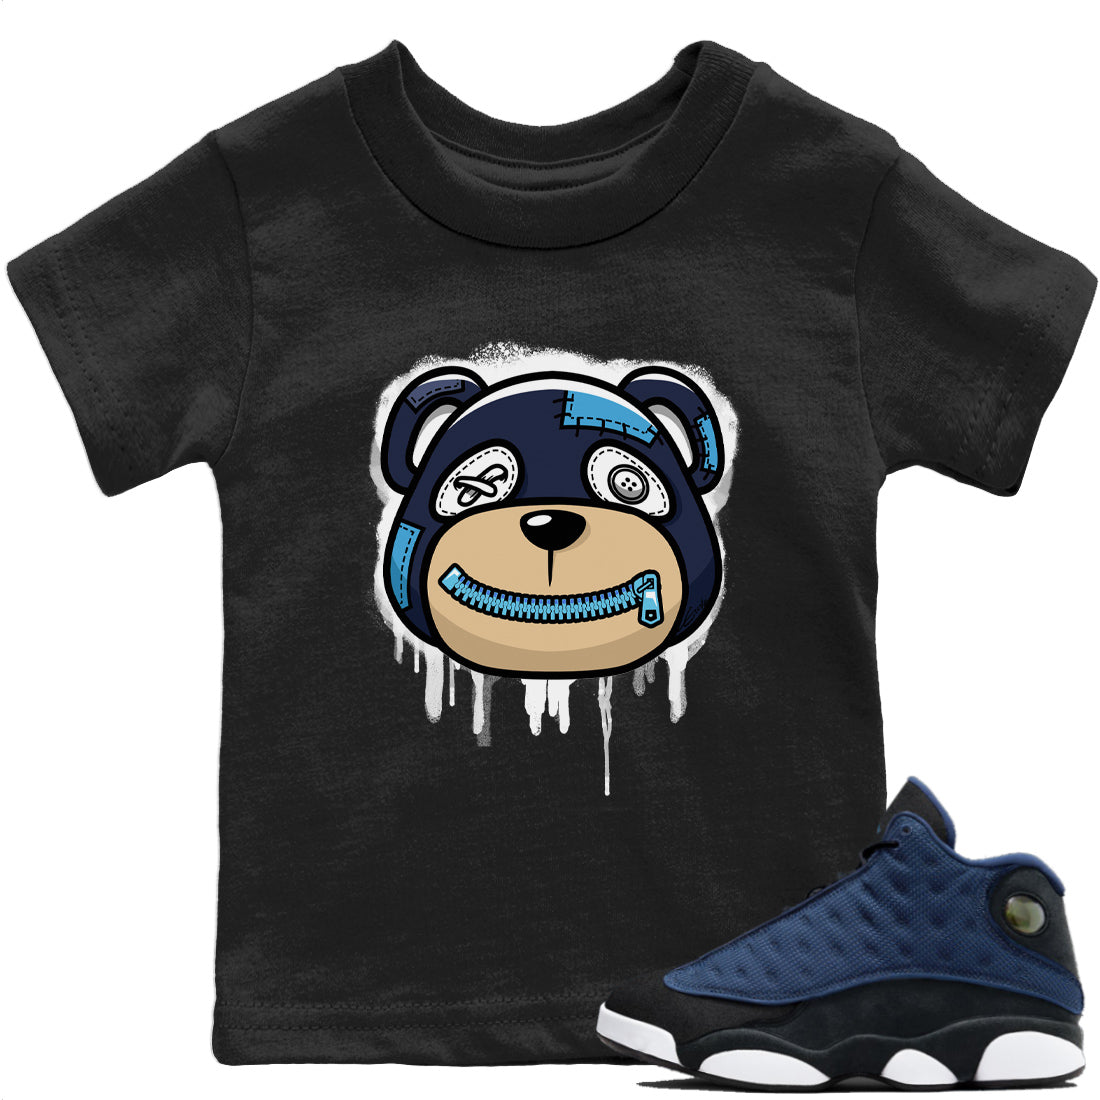 Jordan 13 Brave Blue Sneaker Match Tees Bear Face Sneaker Tees Jordan 13 Brave Blue Sneaker Release Tees Kids Shirts